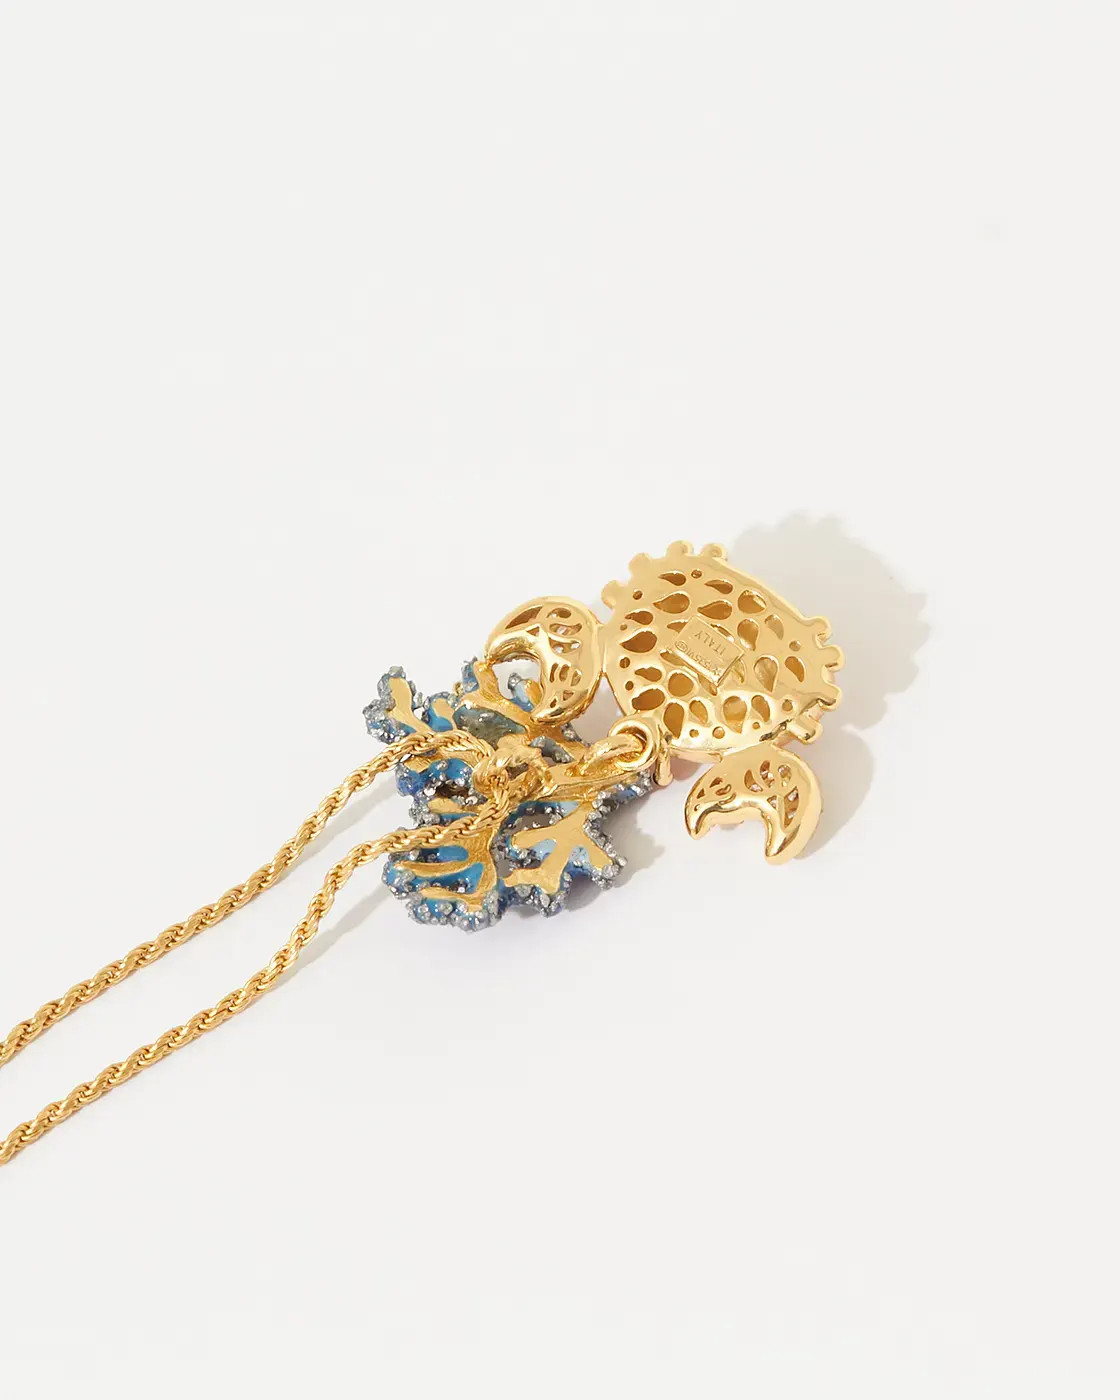 Positano Necklace with Crab Pendant